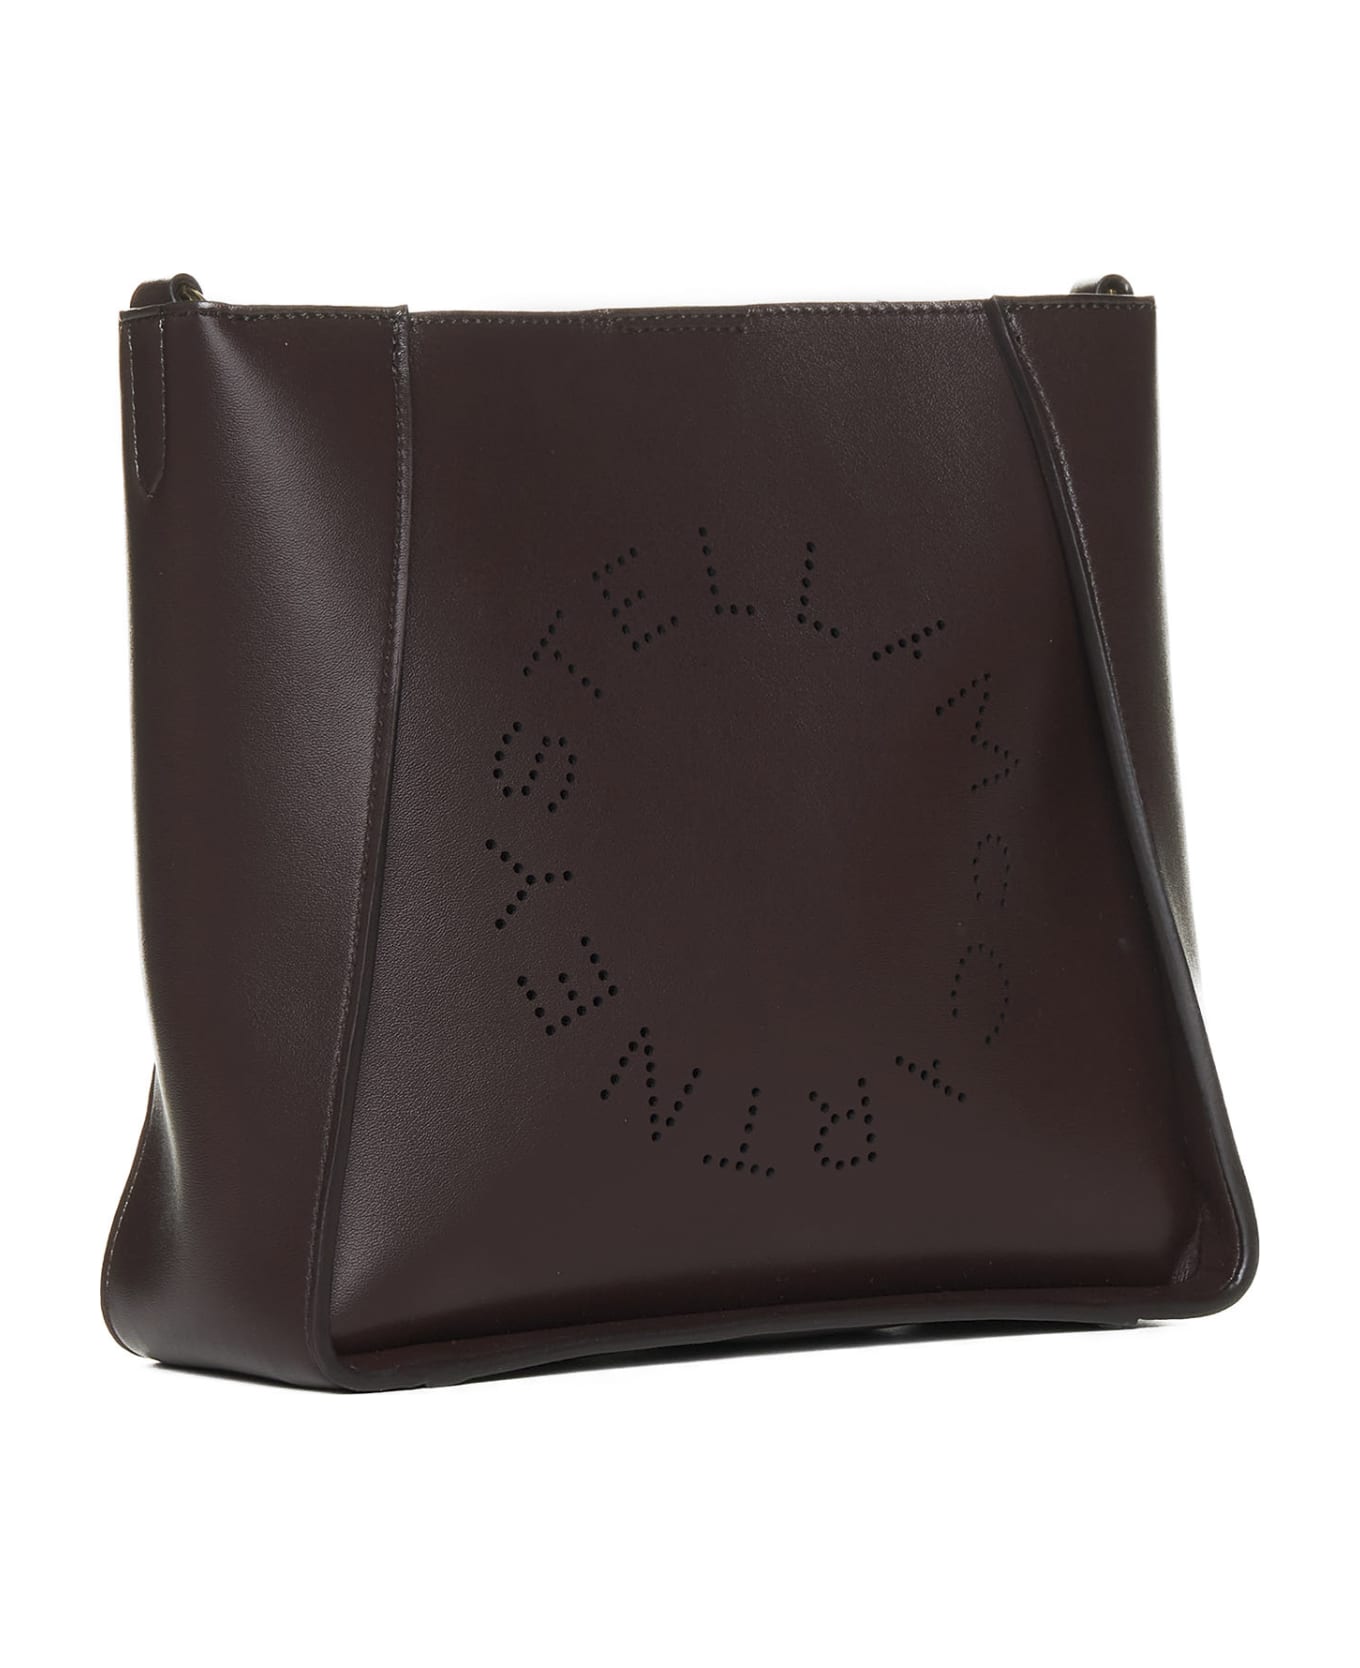 Stella McCartney Crossbody Bag - Chocolate Brown ショルダーバッグ